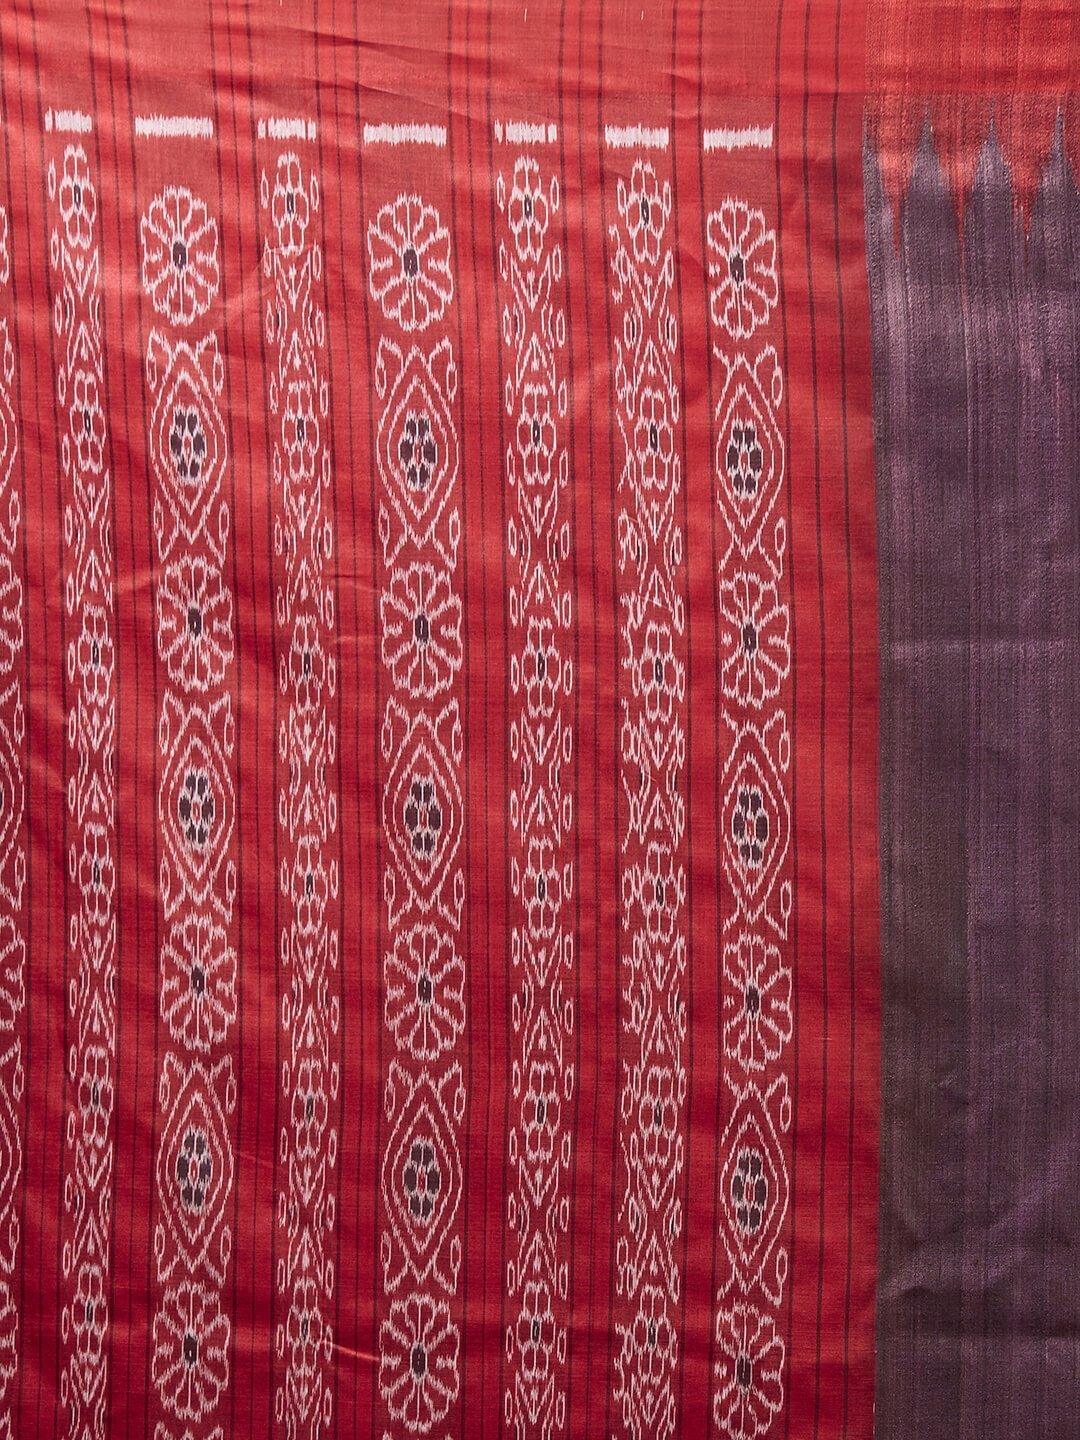 CraftsCollection.in - Brown and Red Tussar Silk Sambalpuri Saree